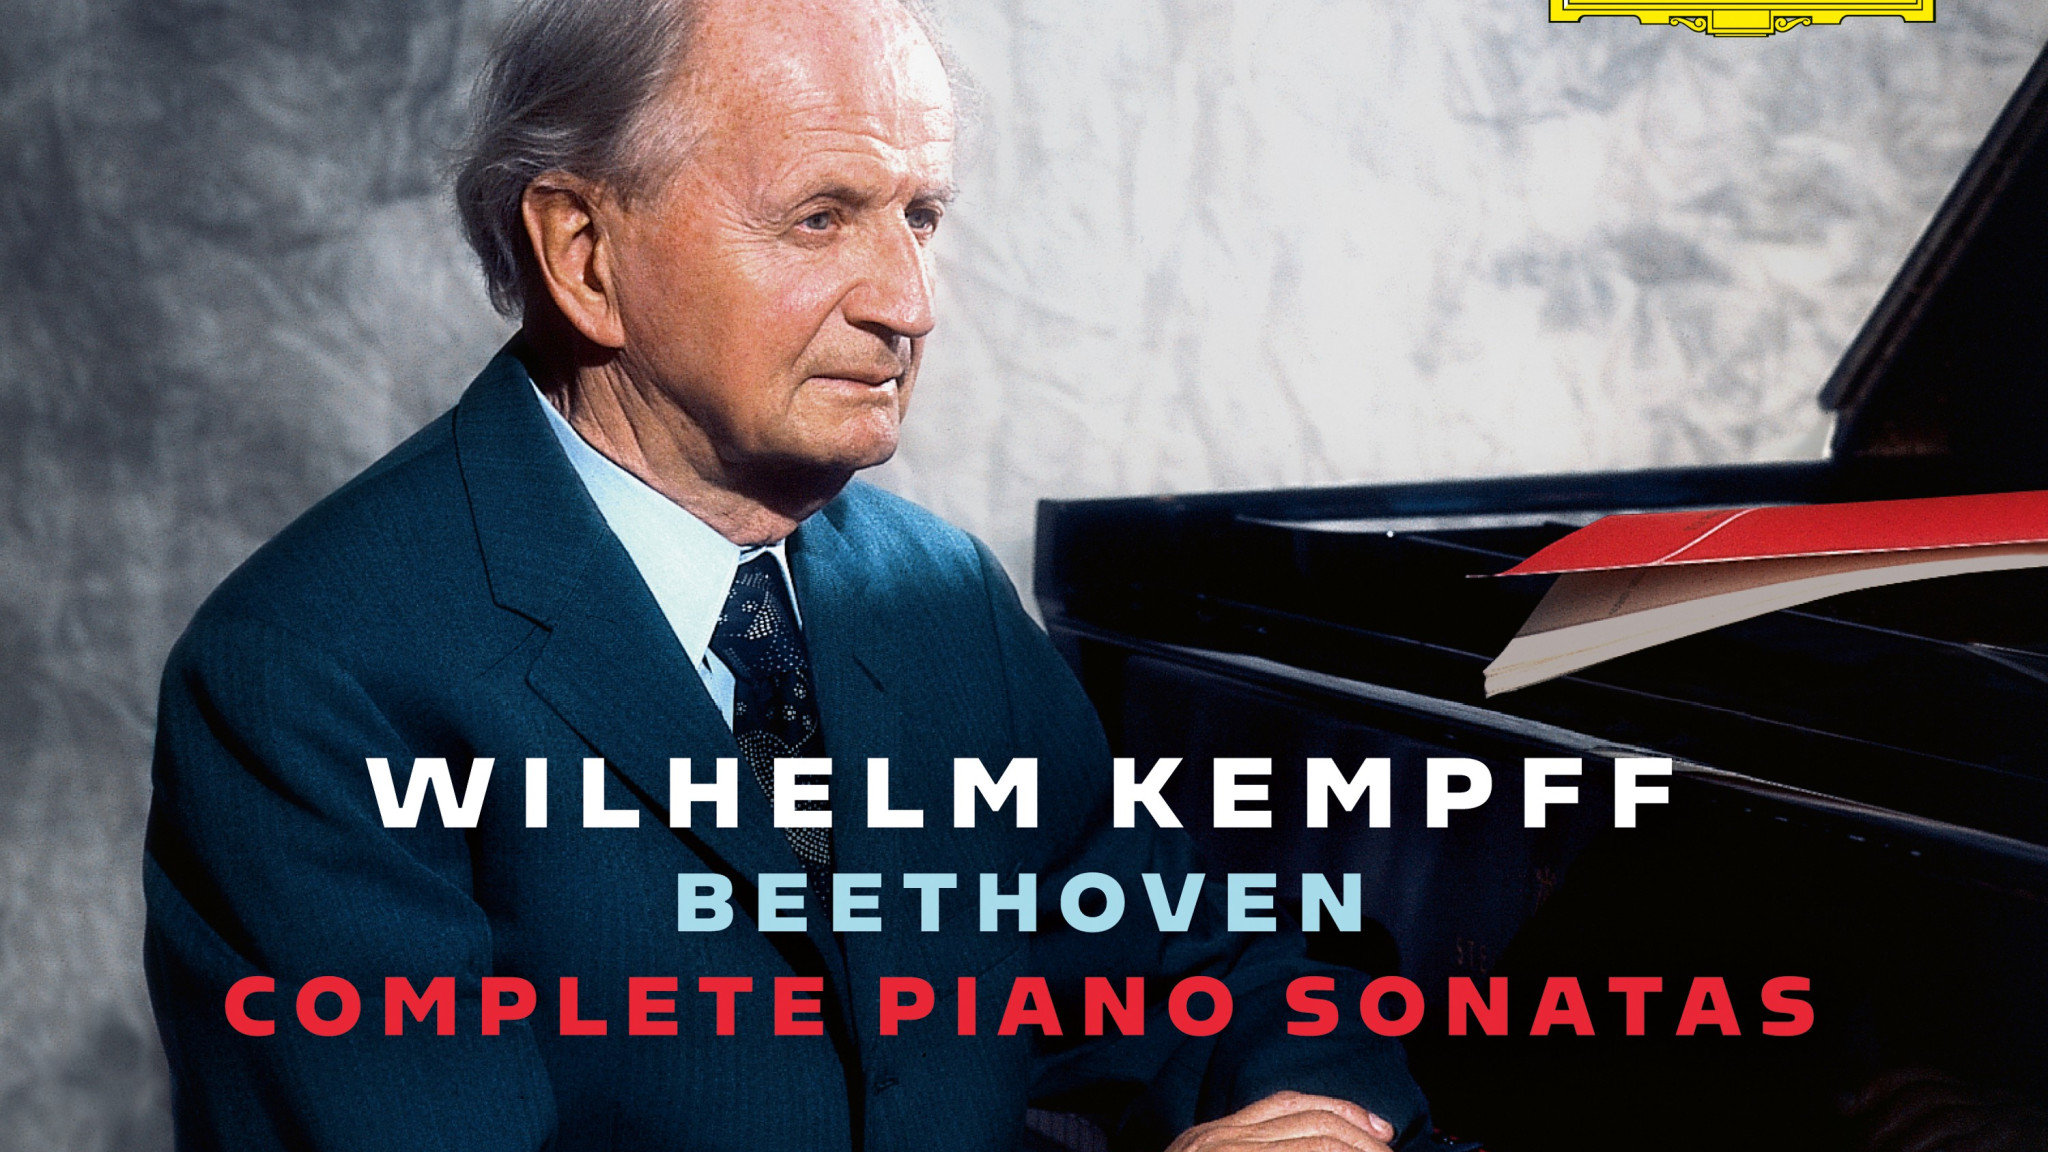 Wilhelm Kempff - Complete Piano Sonatas